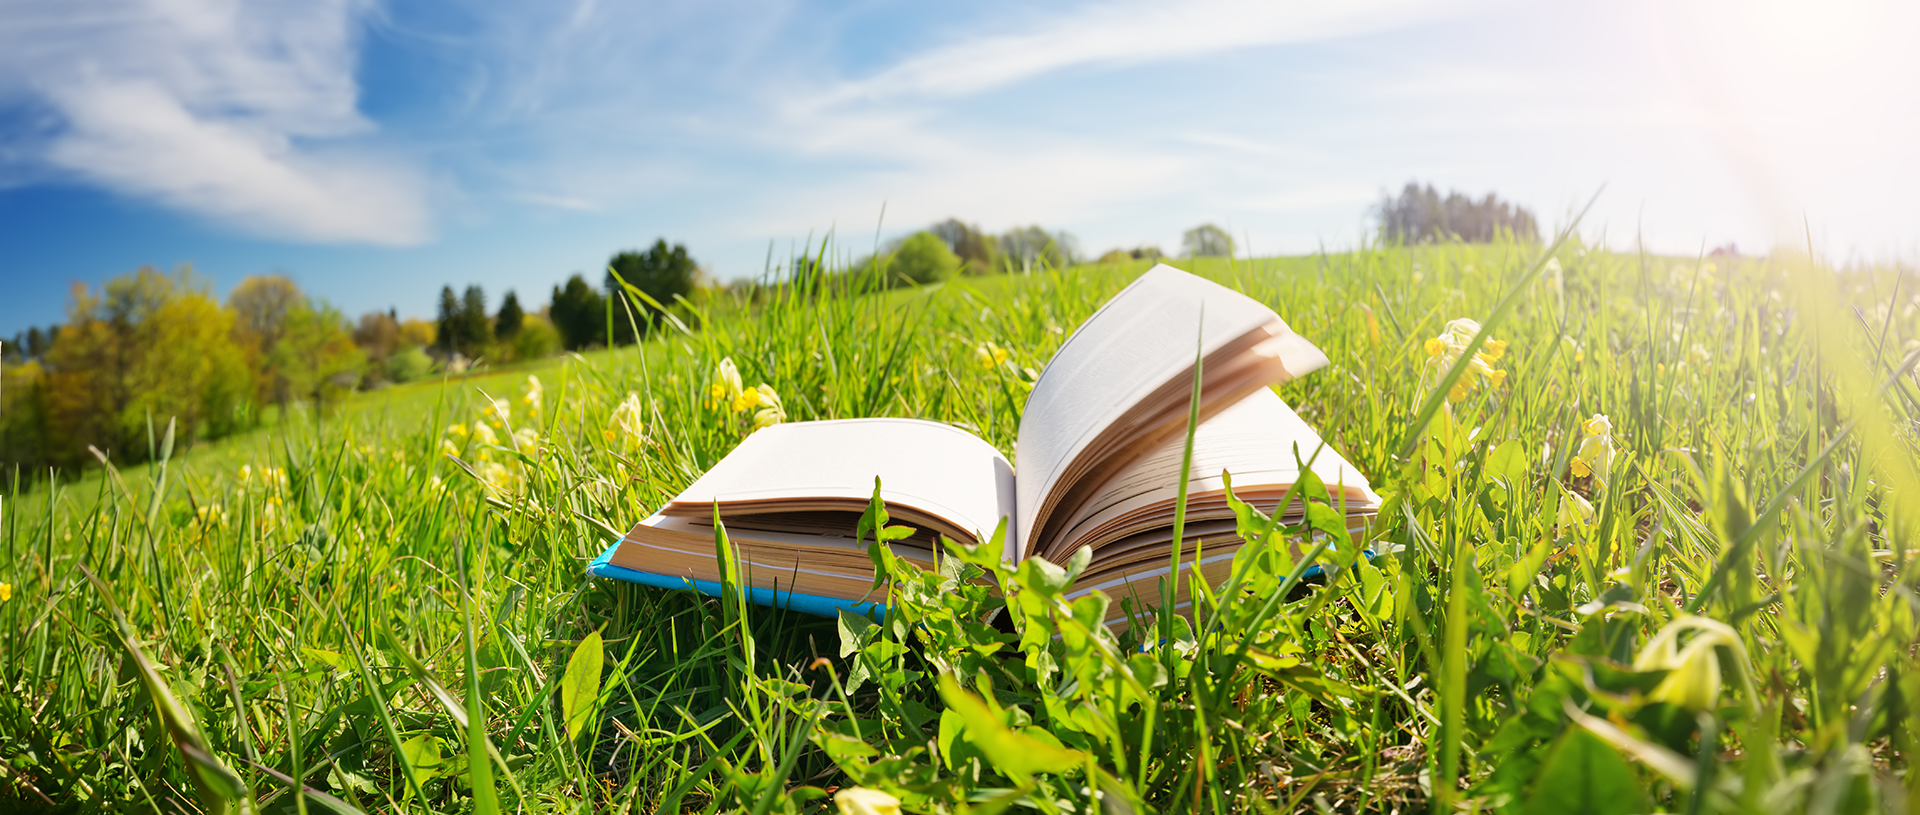 open book in a field